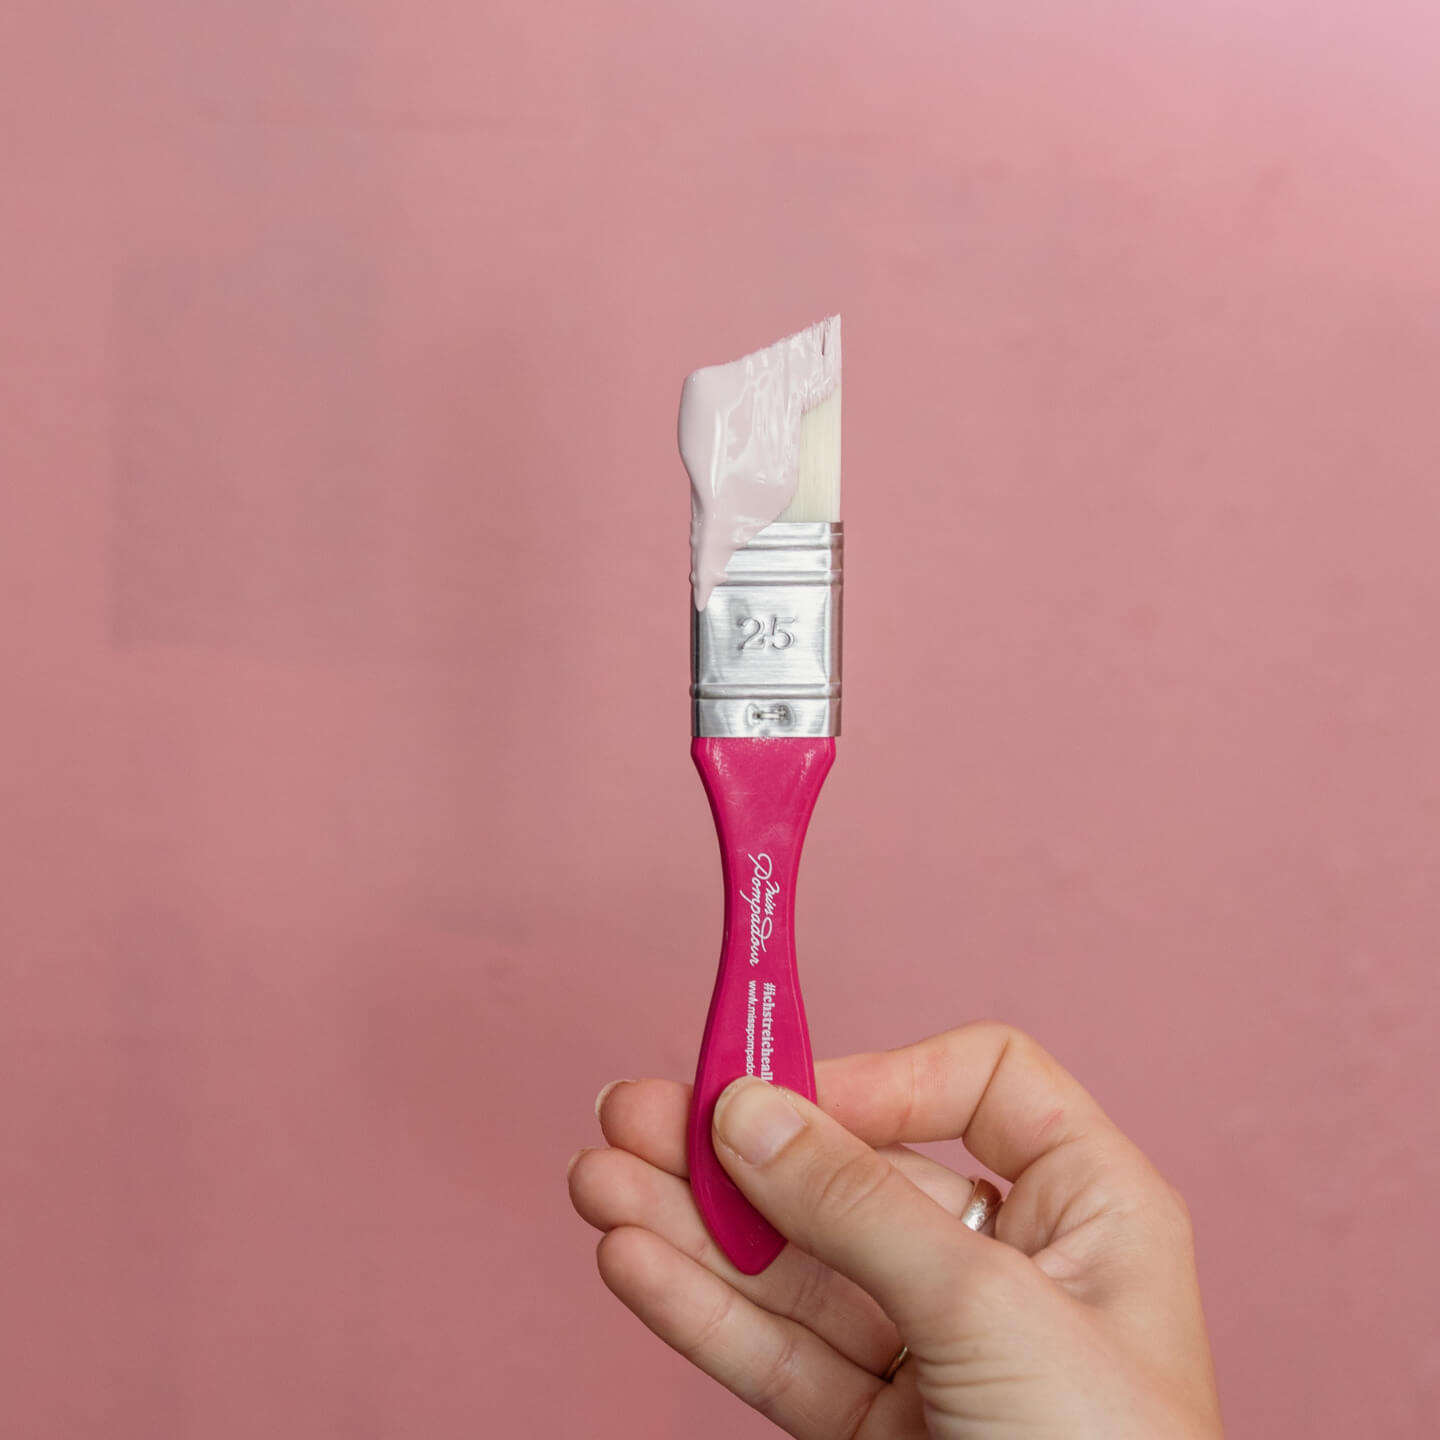 MissPompadour Roze met Kersenbloesem - Afwasbare muurverf 1L